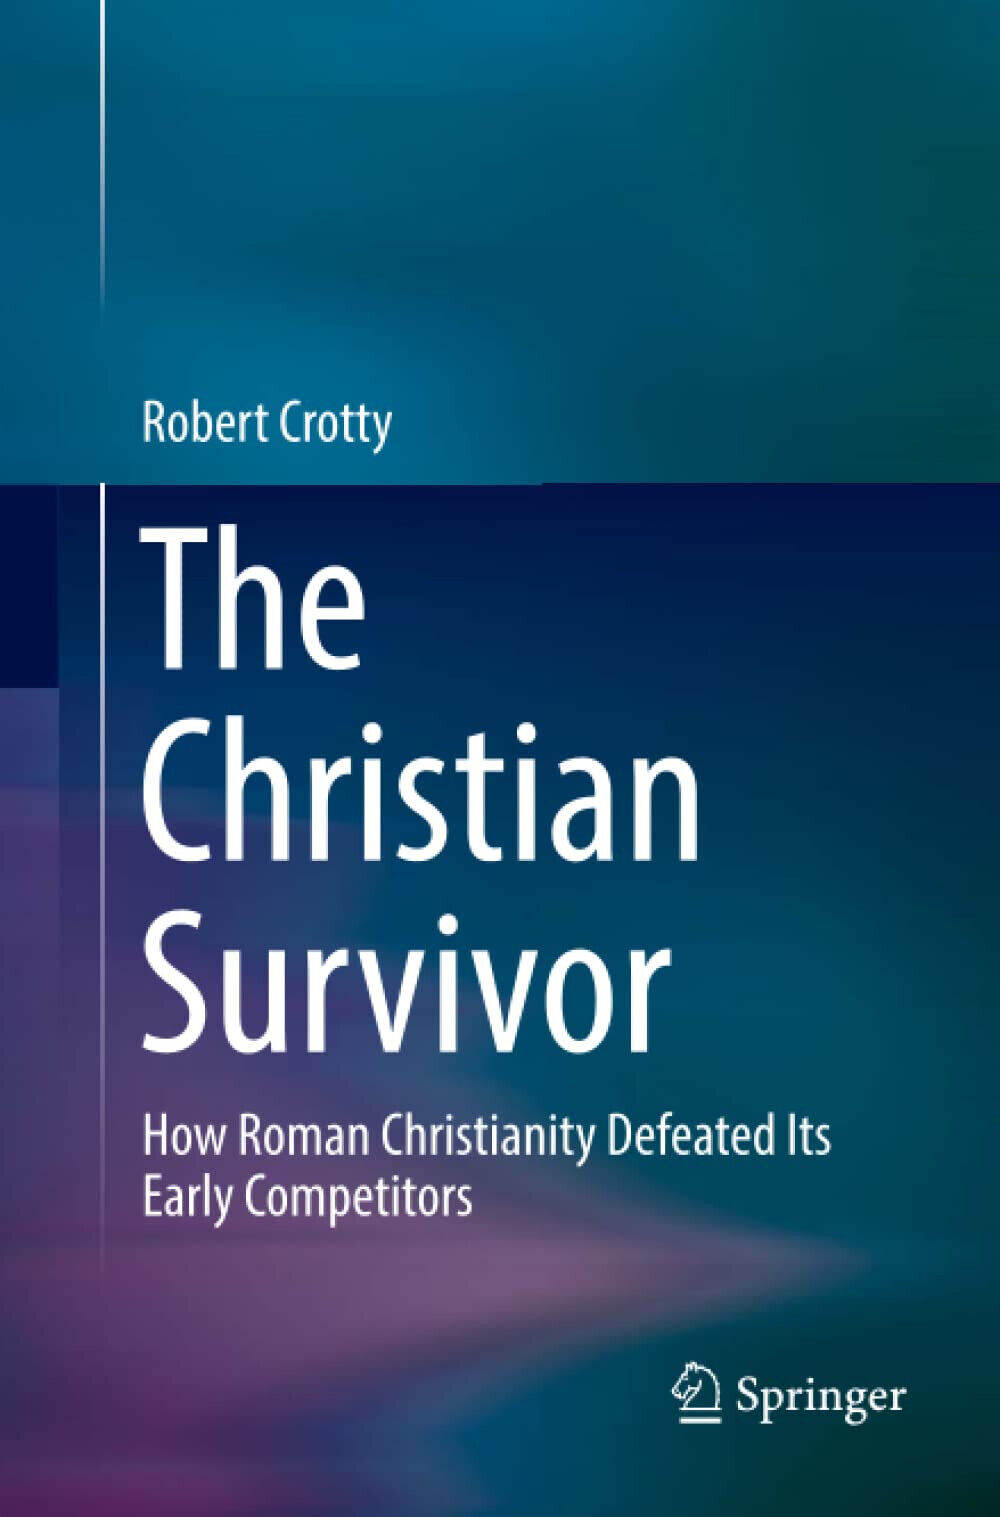 The Christian Survivor - Robert Crotty - Springer, 2018